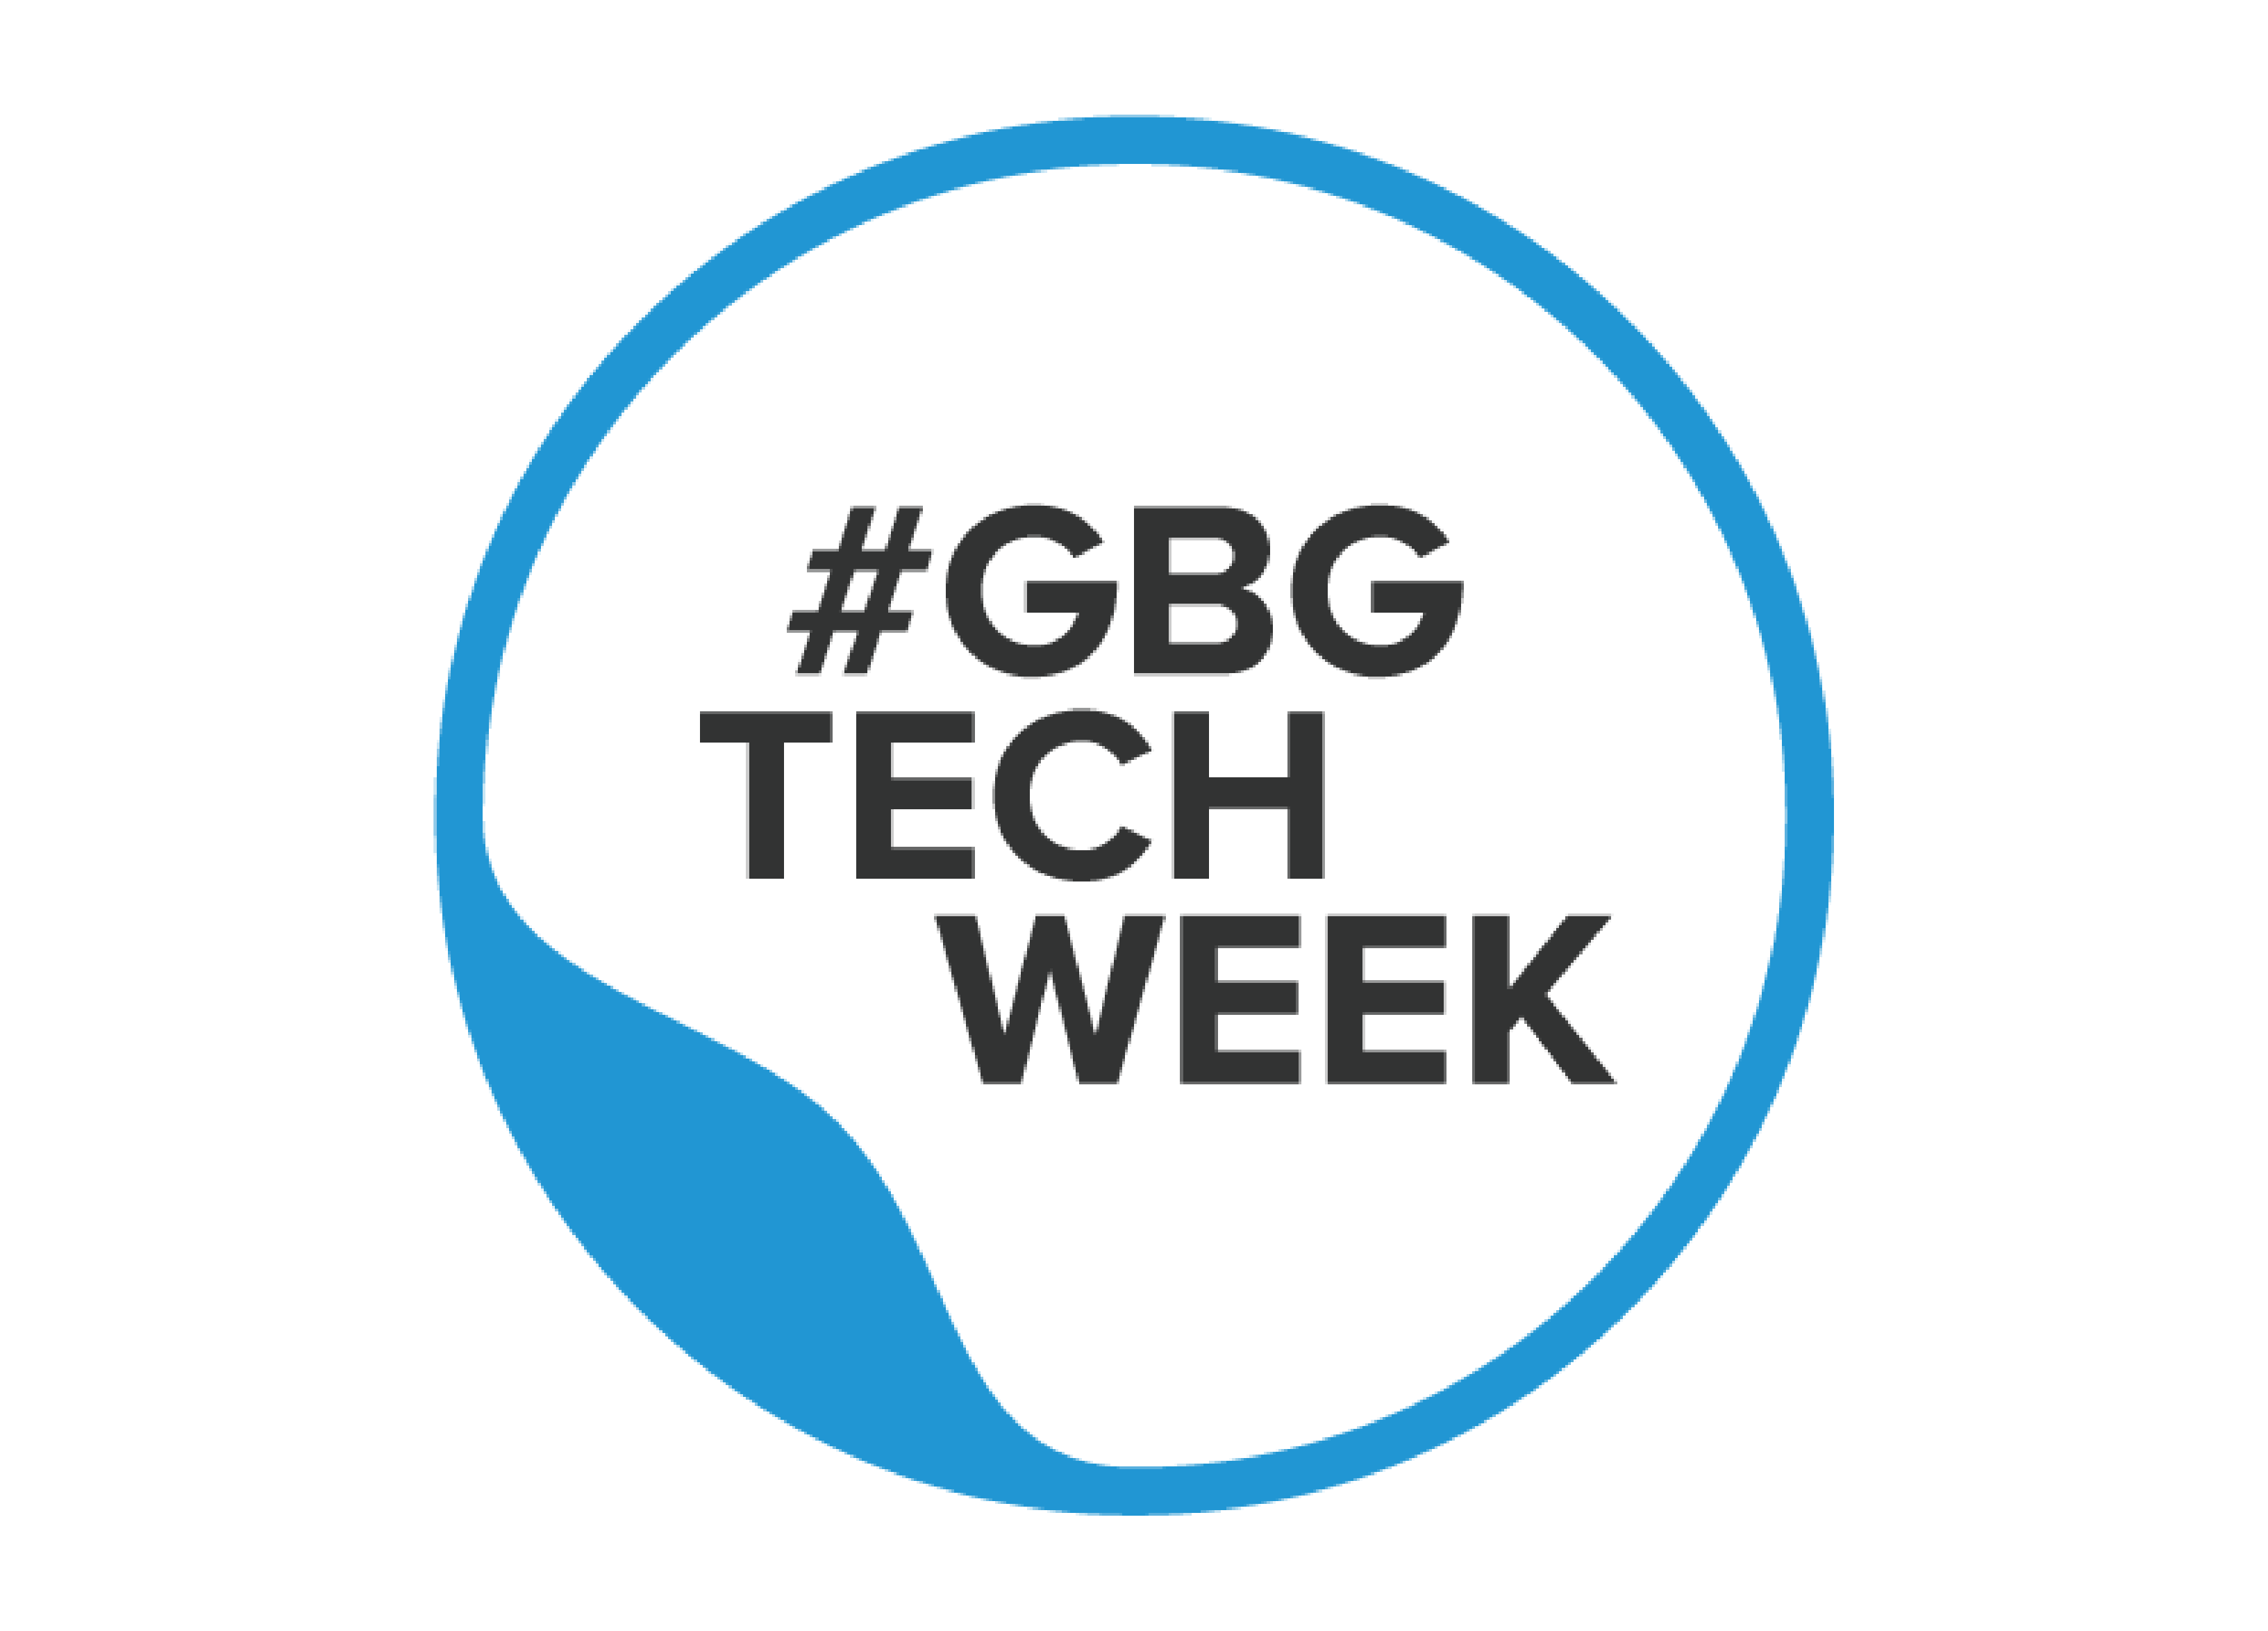 gbg tech week logo